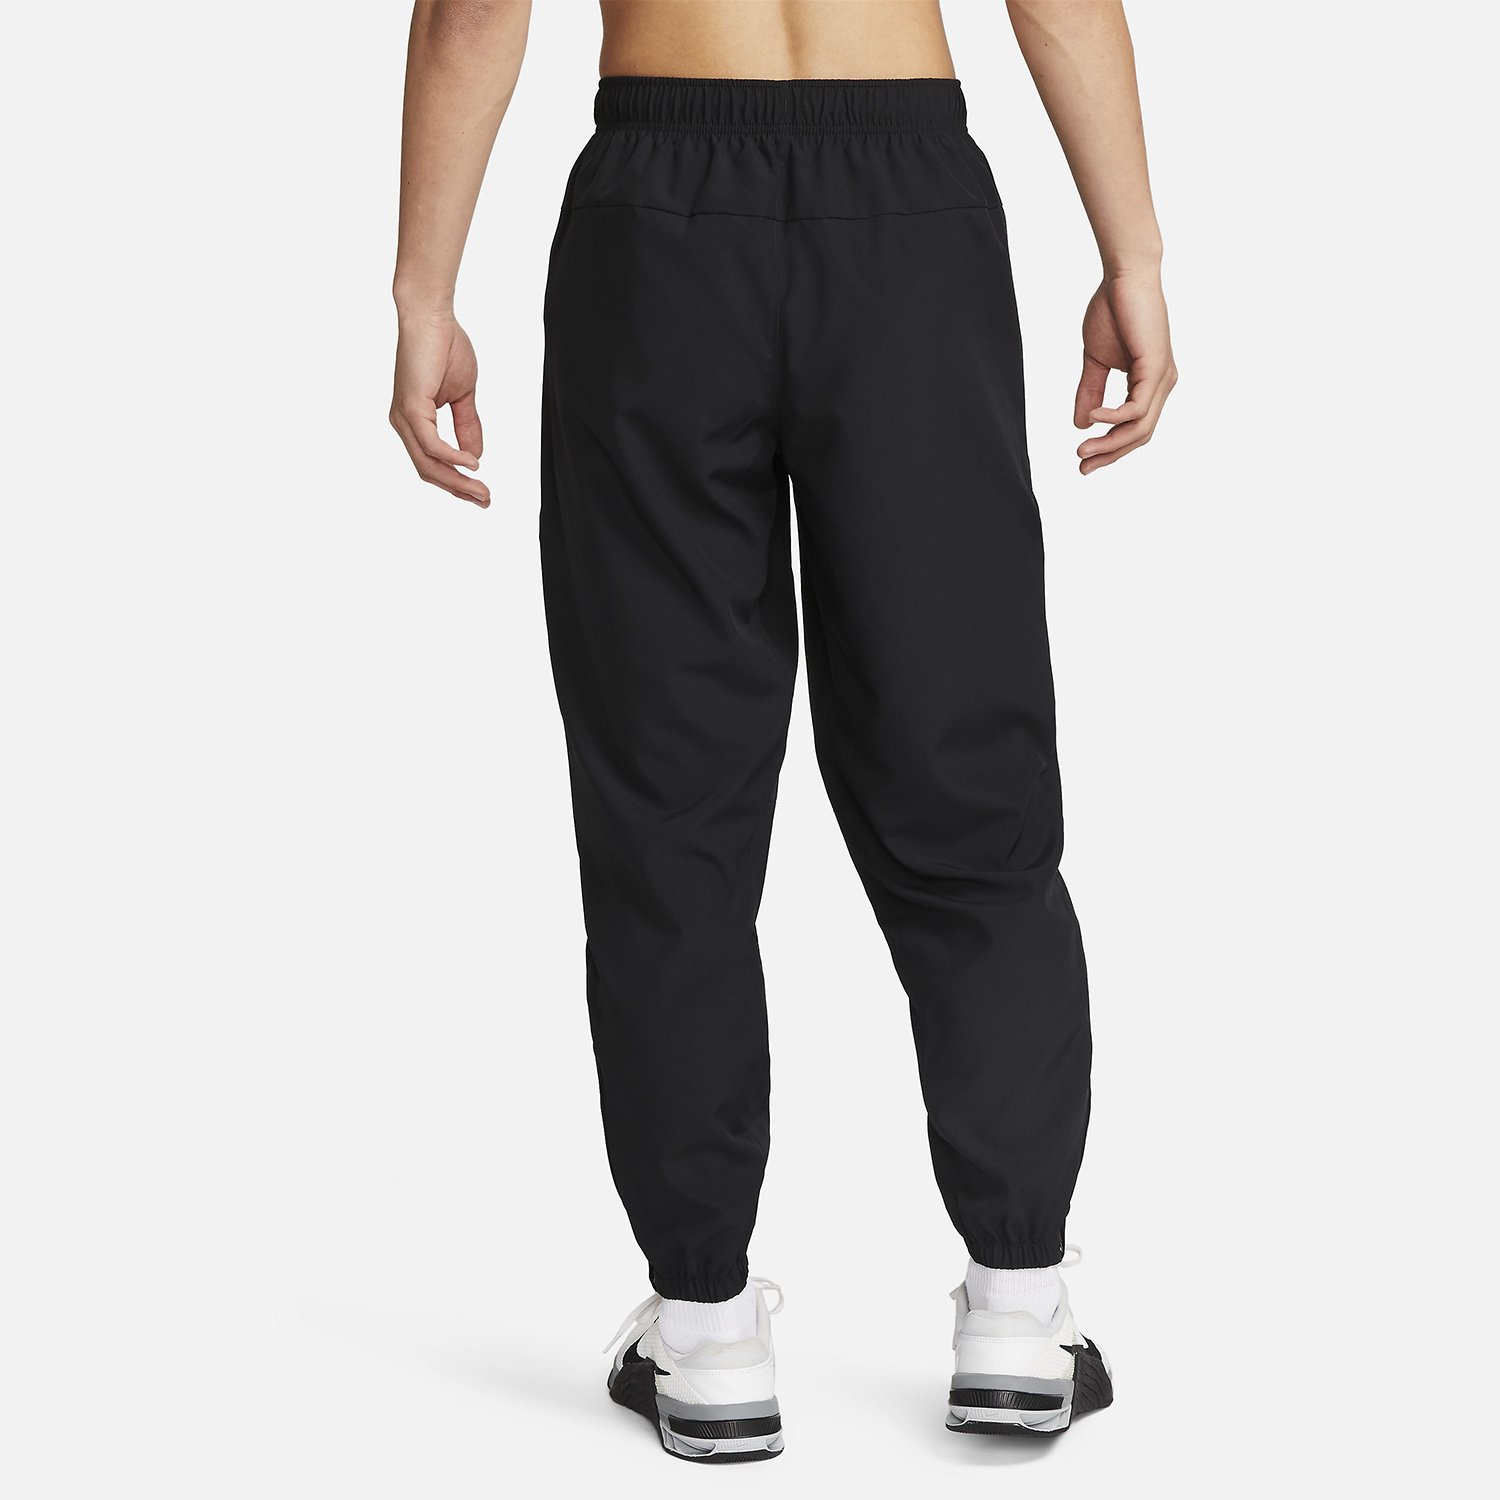 Nike Dri-FIT Form Men's Training Pants - Black/Reflective Silver